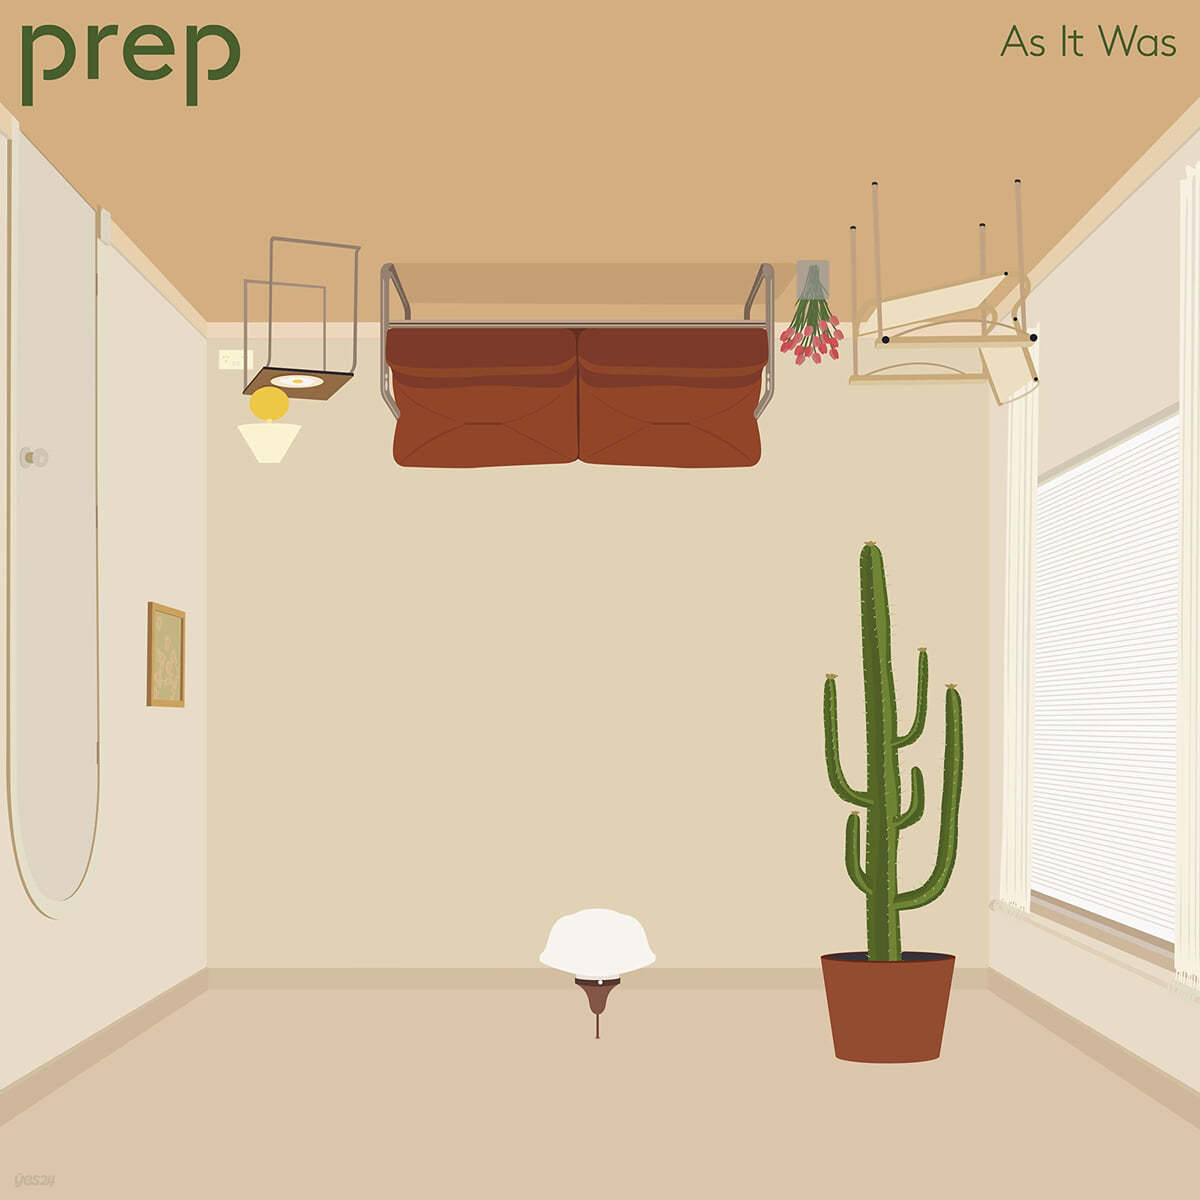 Prep (프렙) - As It Was [7인치 싱글 Vinyl] 